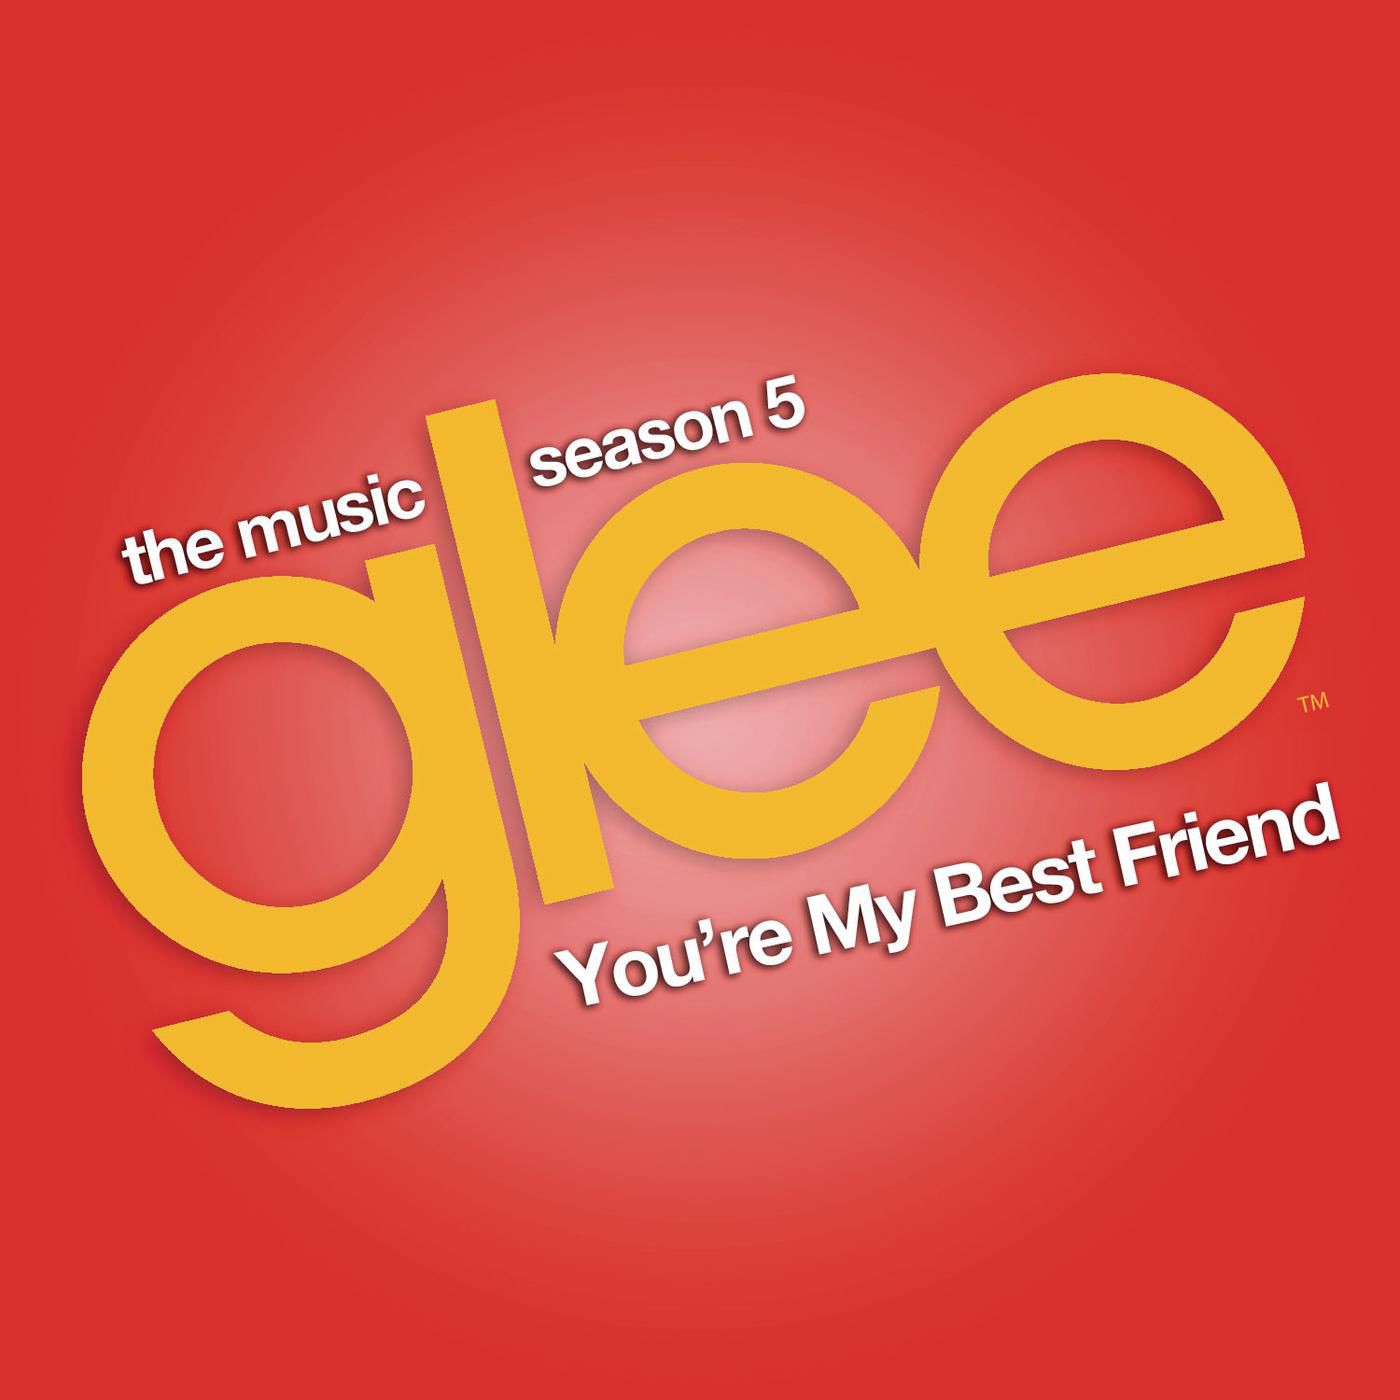 You’re My Best Friend (Glee Cast Version)